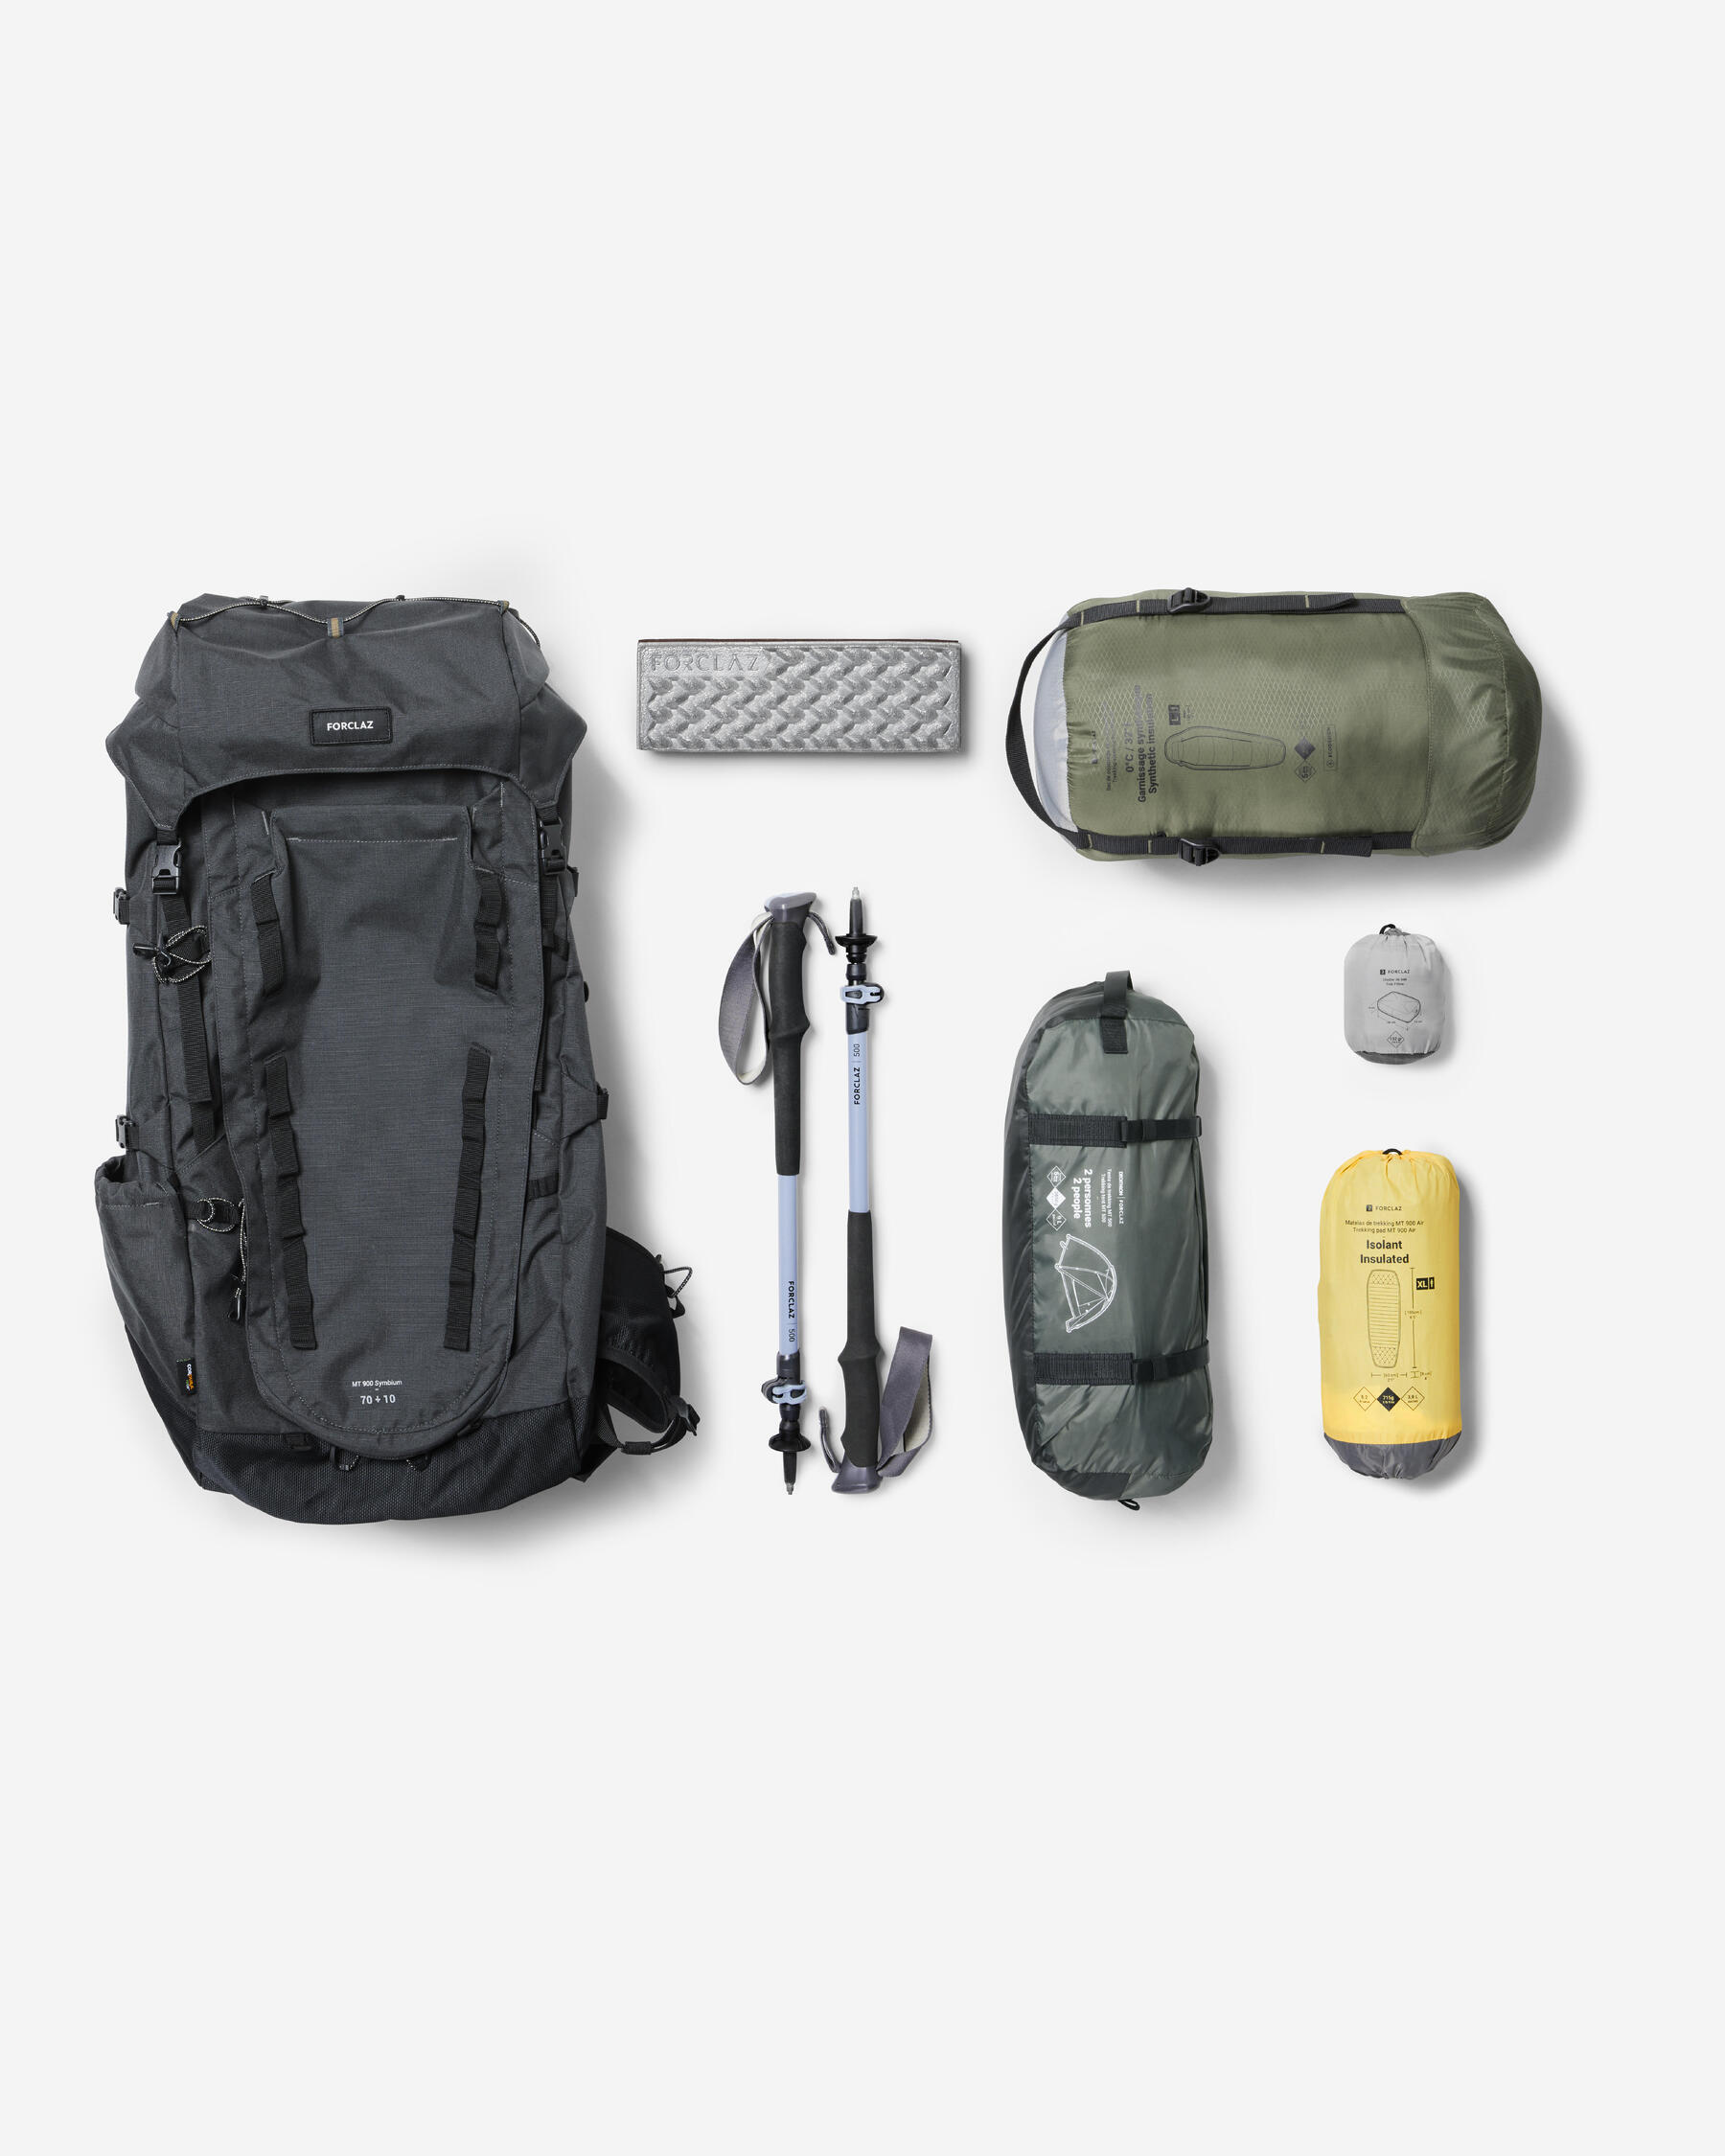 Trekking tent and essentials